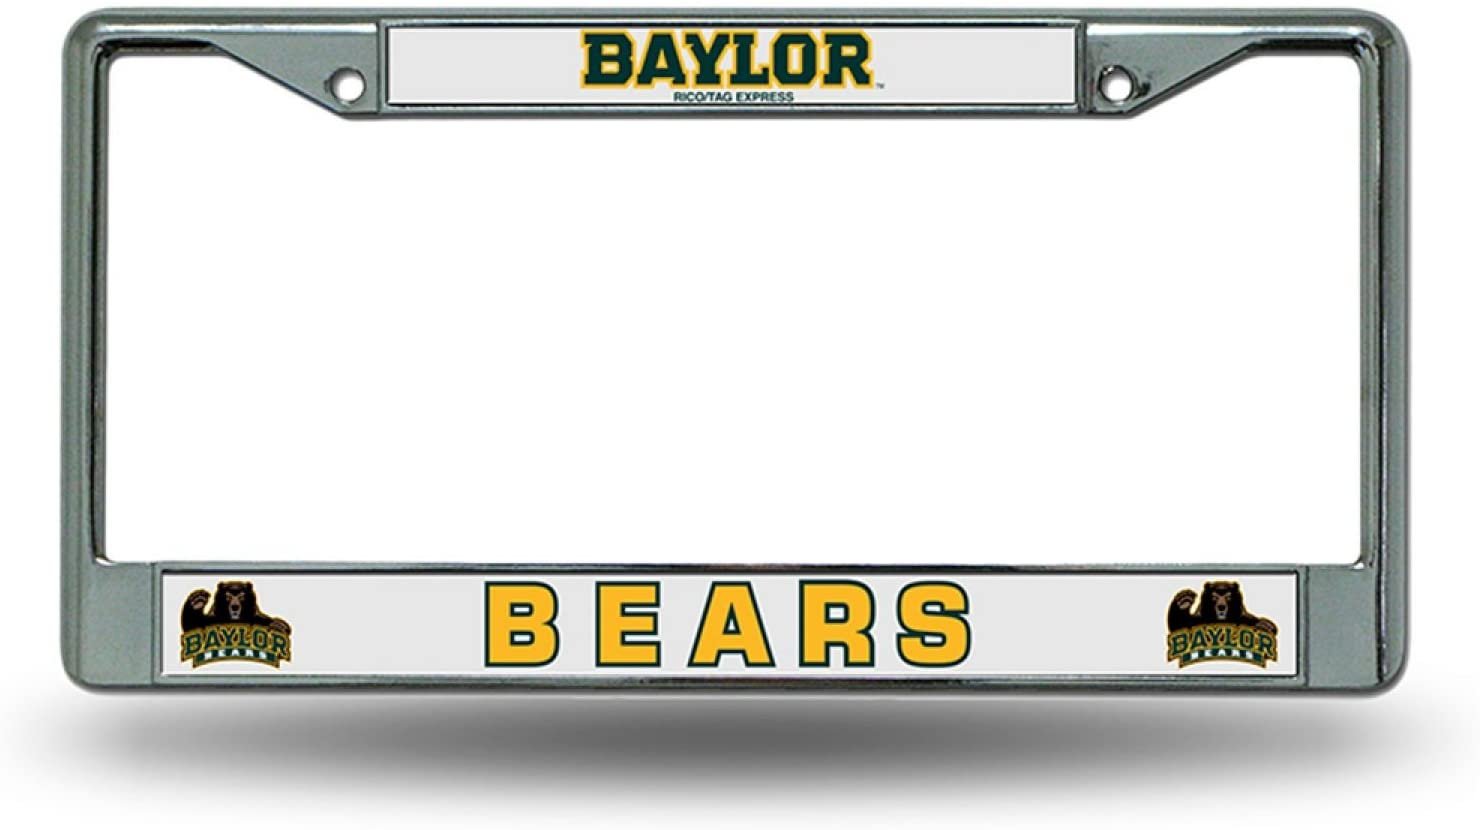 Baylor University Bears Premium Metal License Plate Frame Chrome Tag Cover, 12x6 Inch